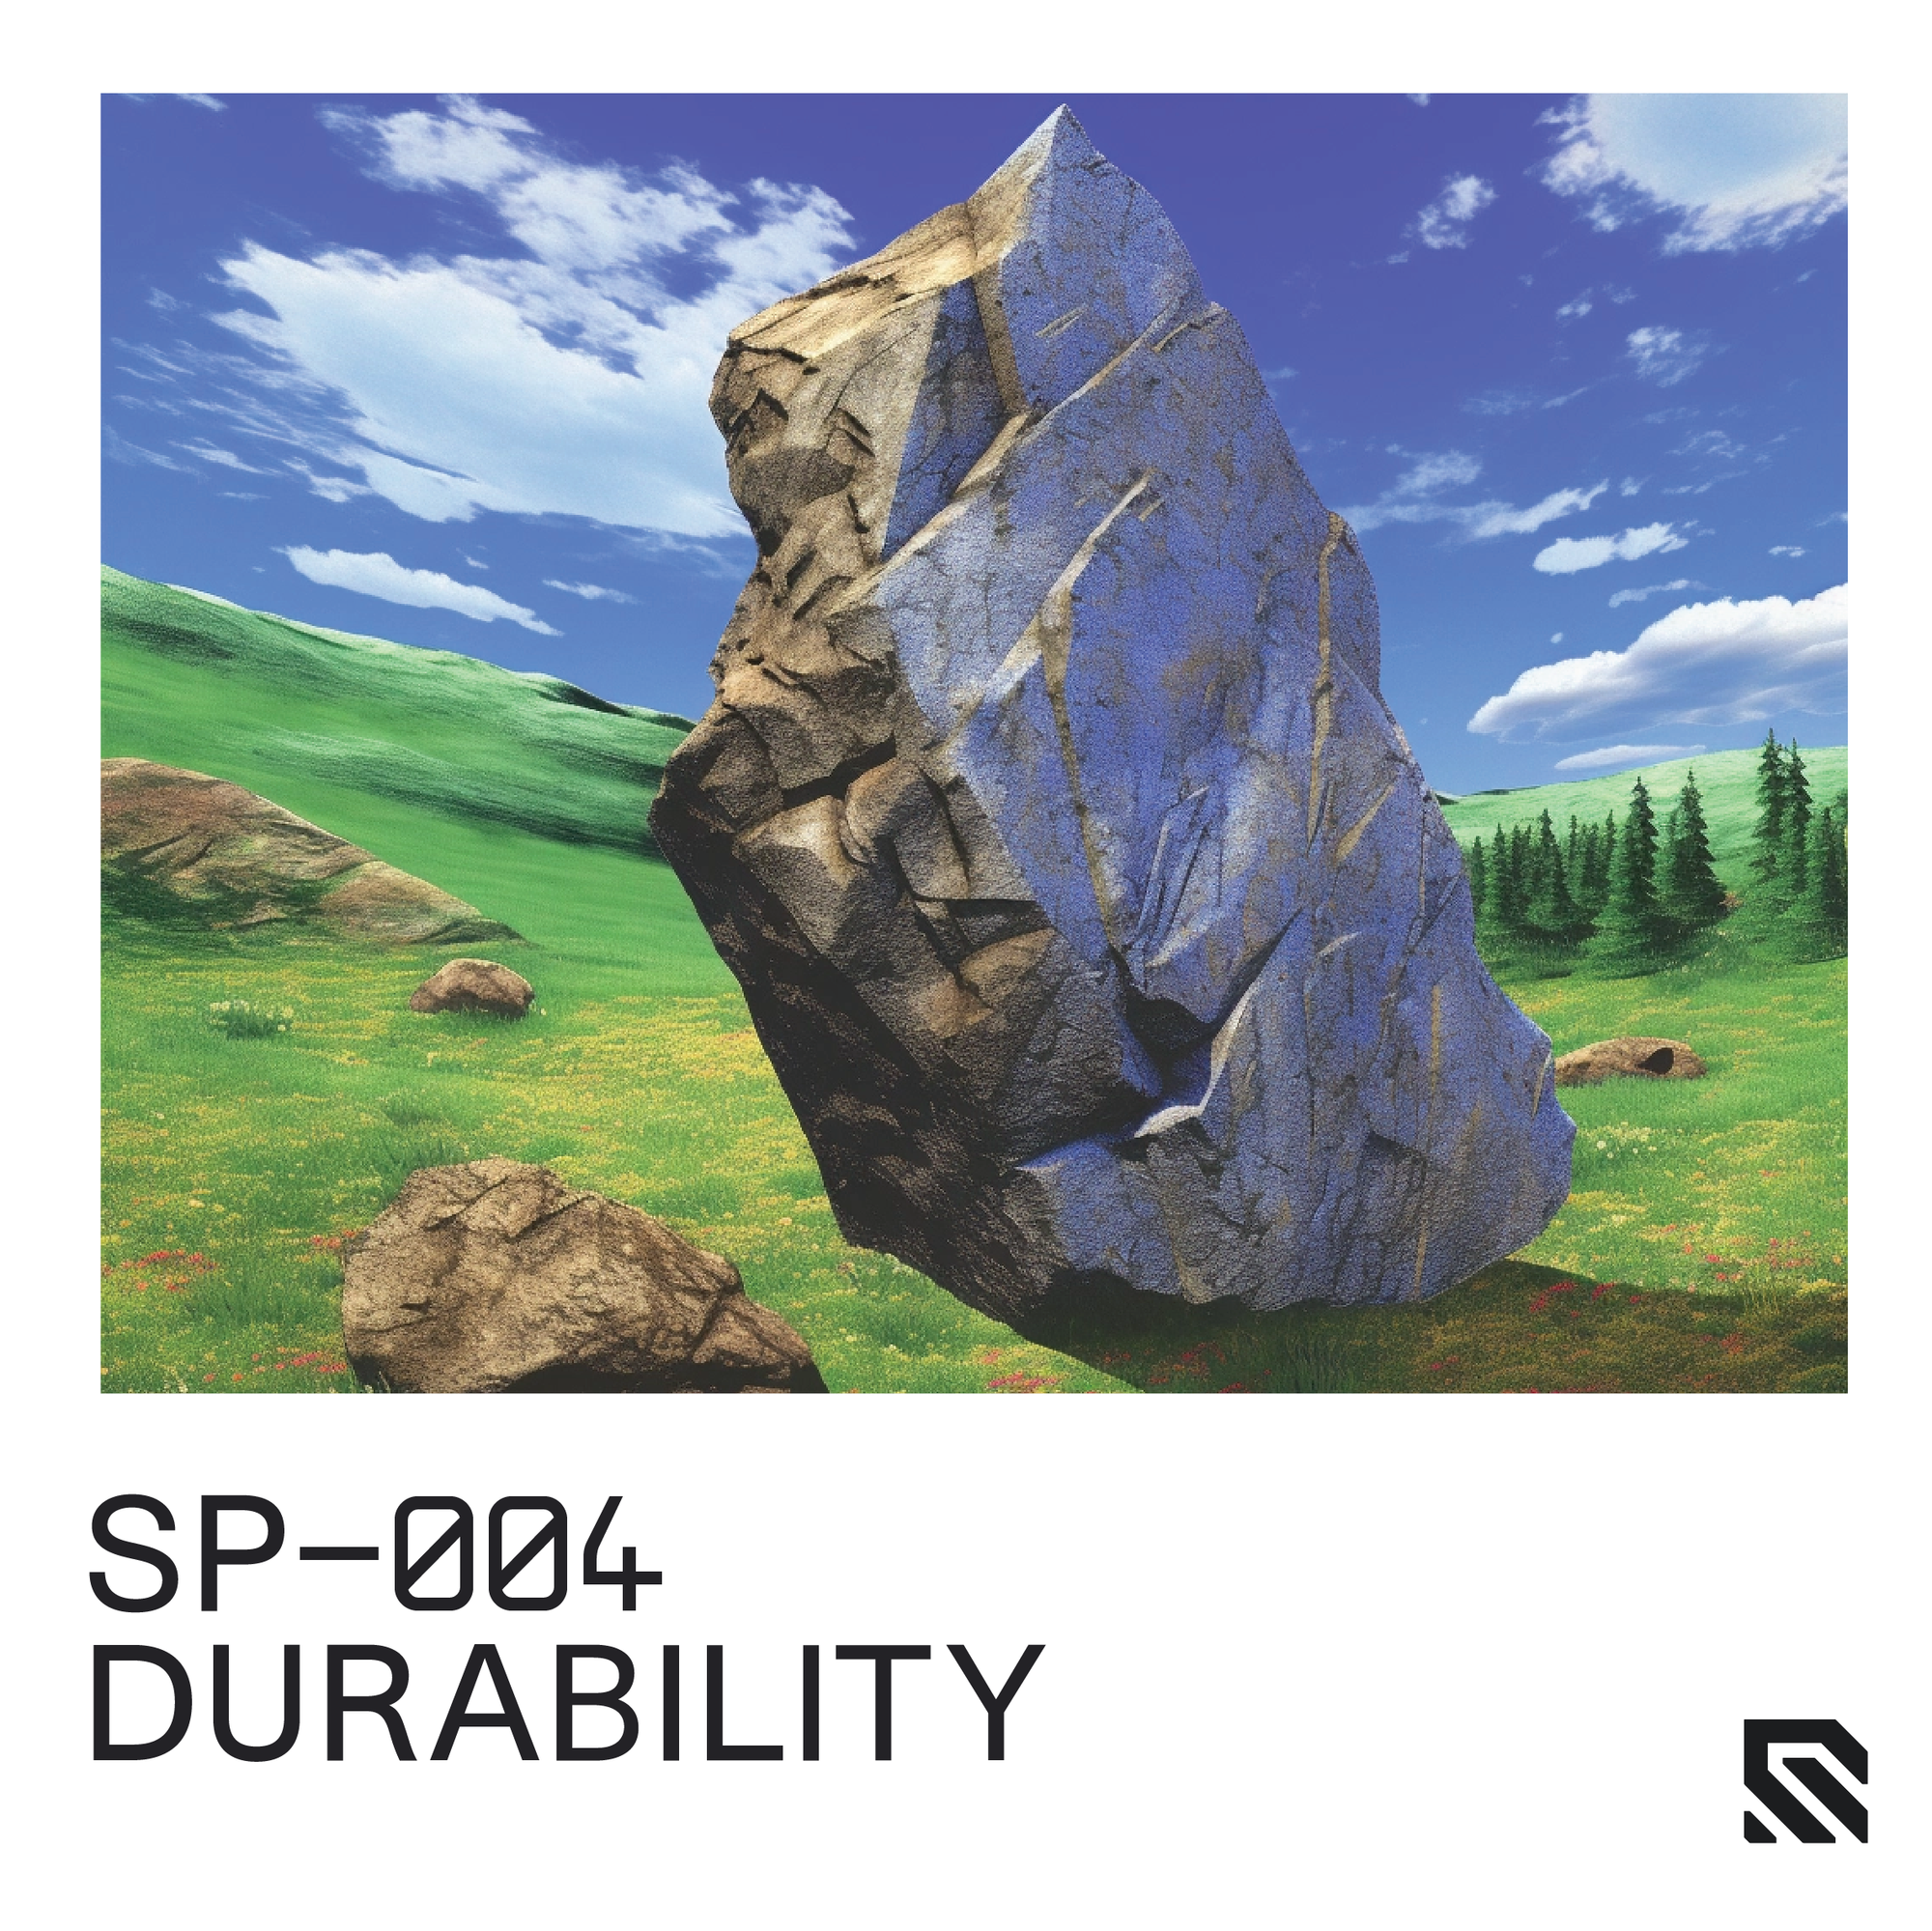 WALLHACK SP-004 Durable Rock in a green hillside landscape from a digital game